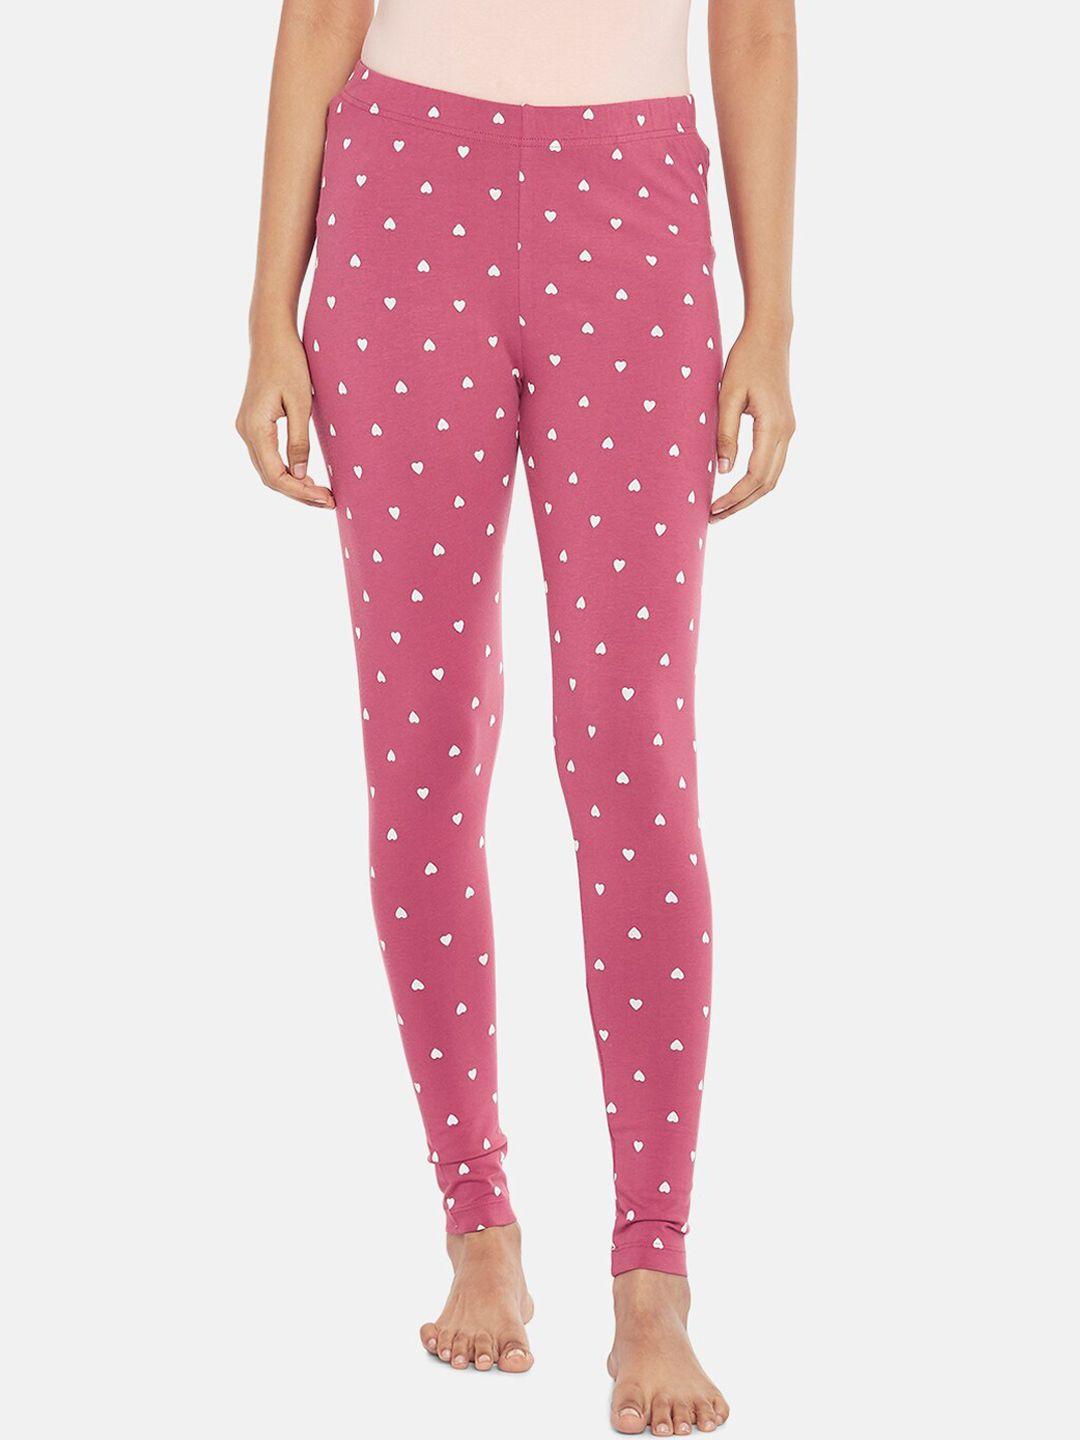 dreamz by pantaloons women pink & white printed cotton ankle-length leggings